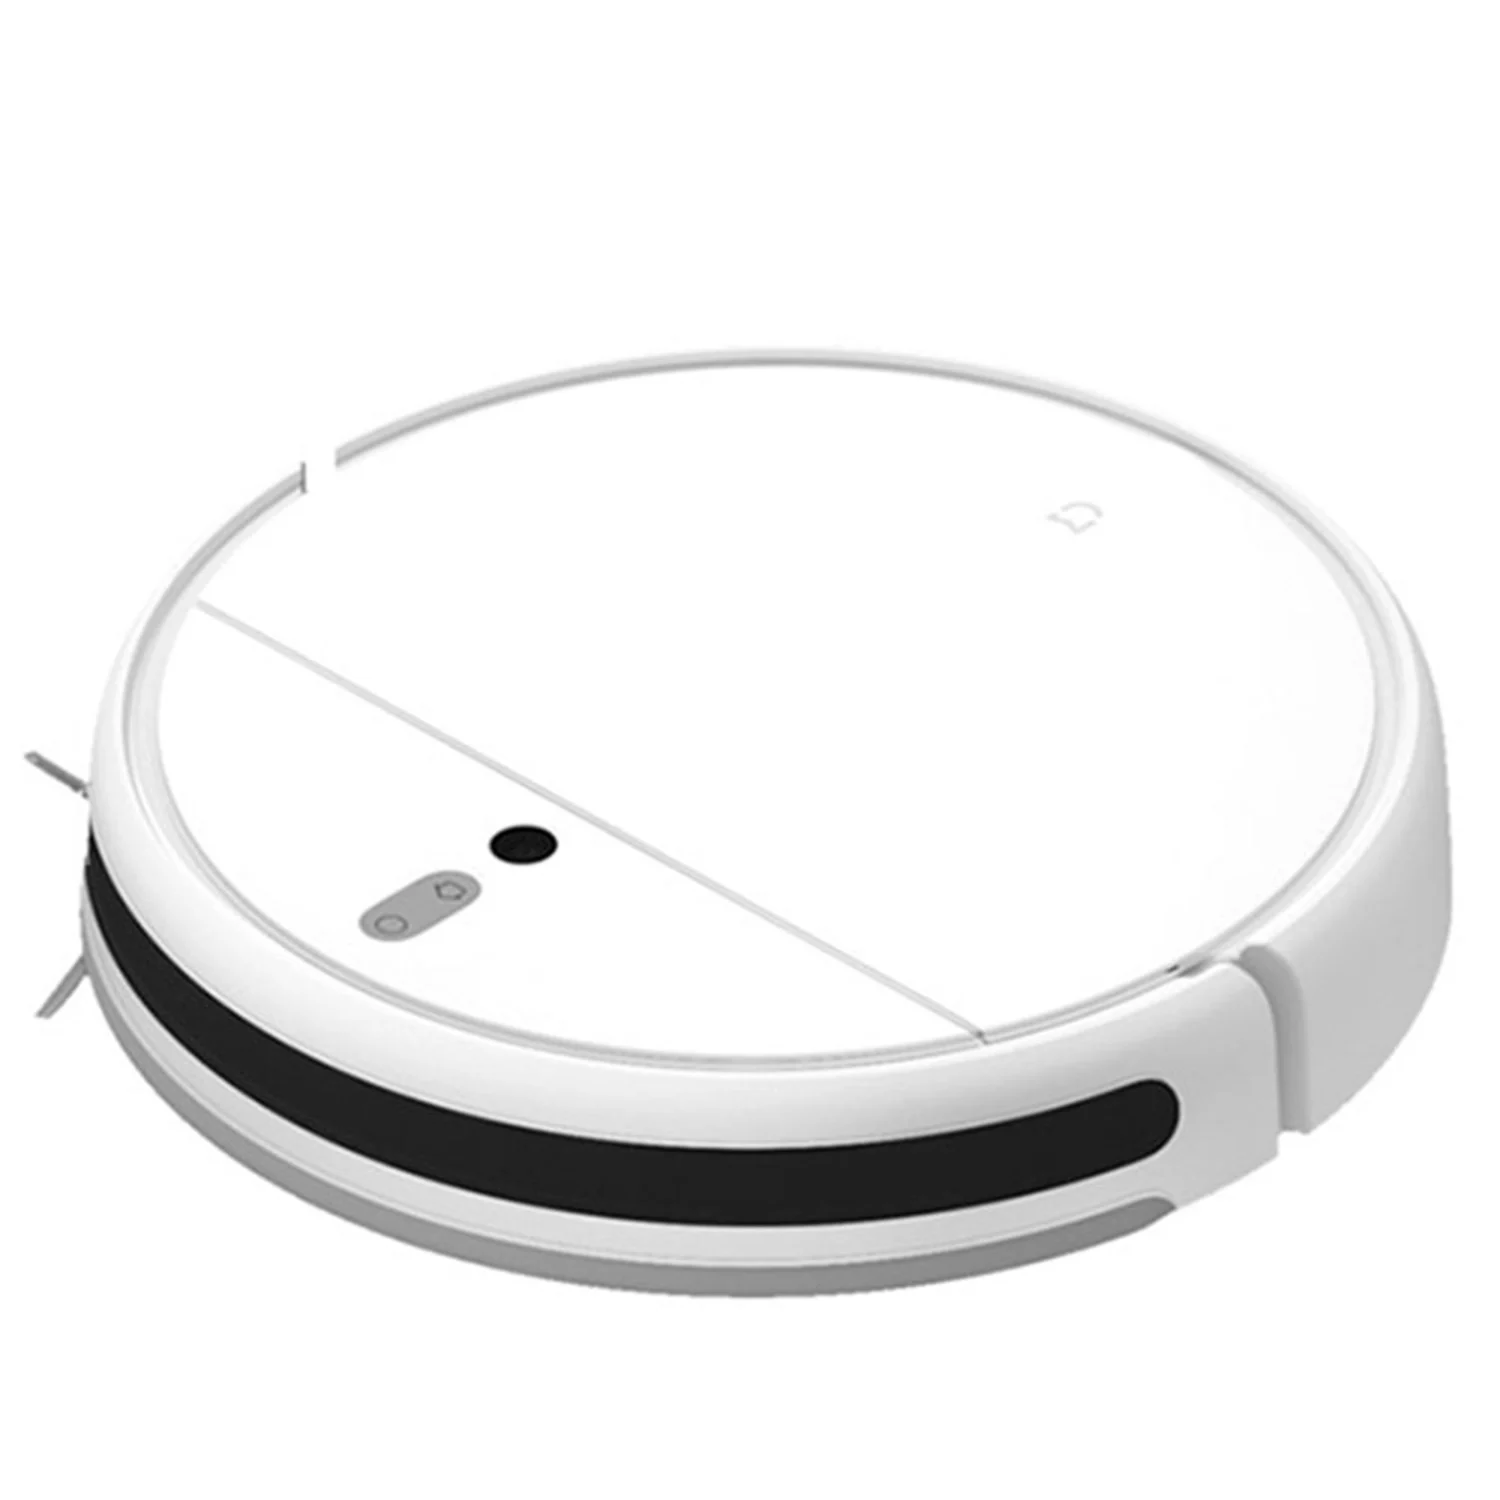 Robô aspirador Xiaomi Cleaner Vacuum - Branco (STYTJ01ZHM)